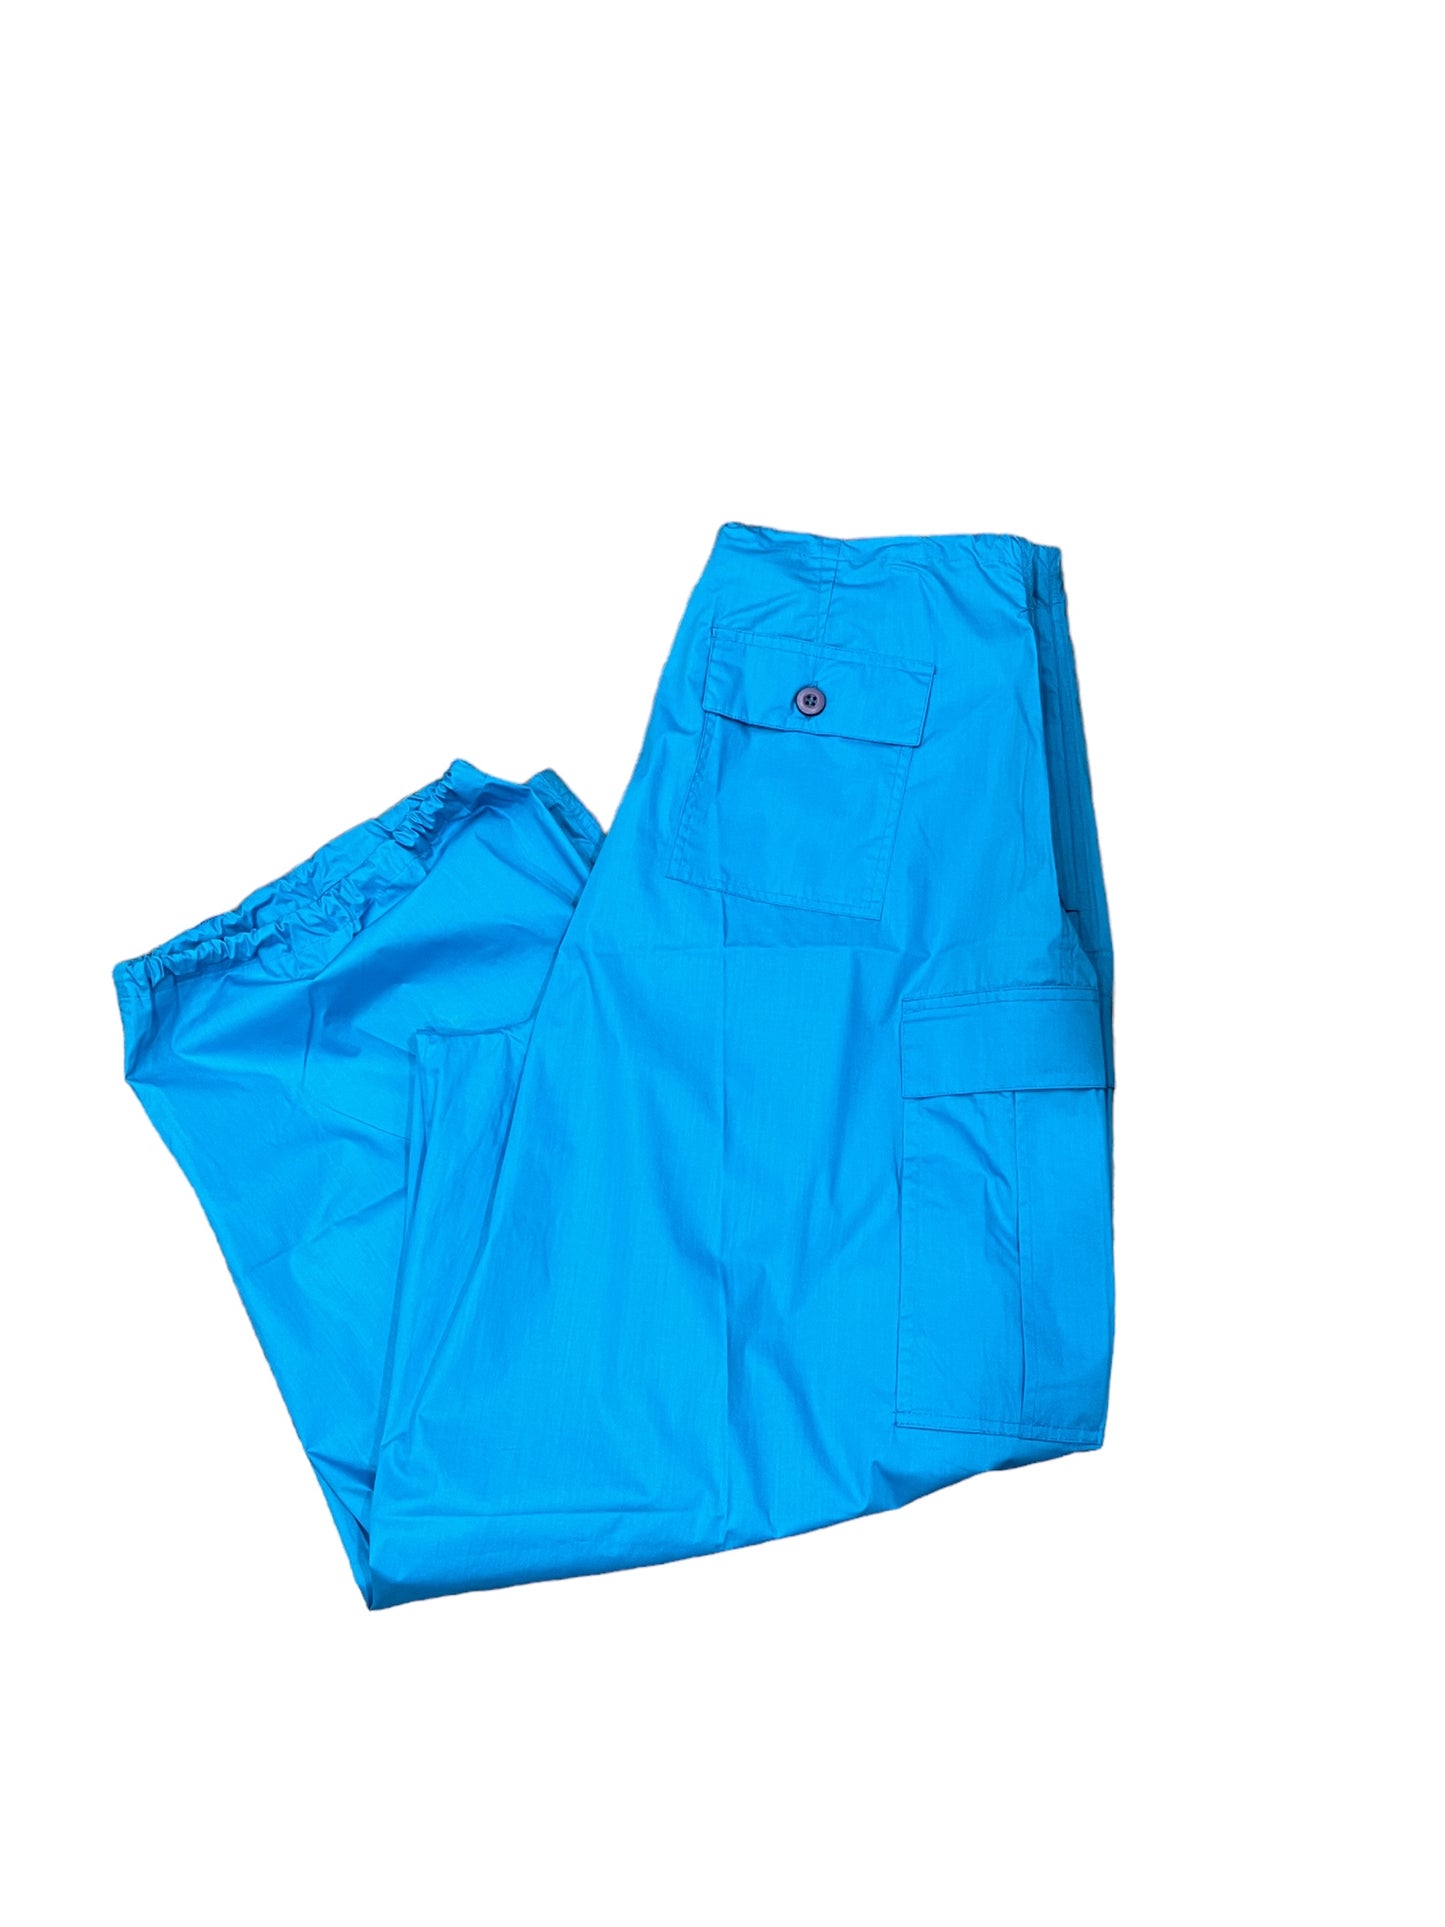 UFO Turquoise Parachute Pants 80018